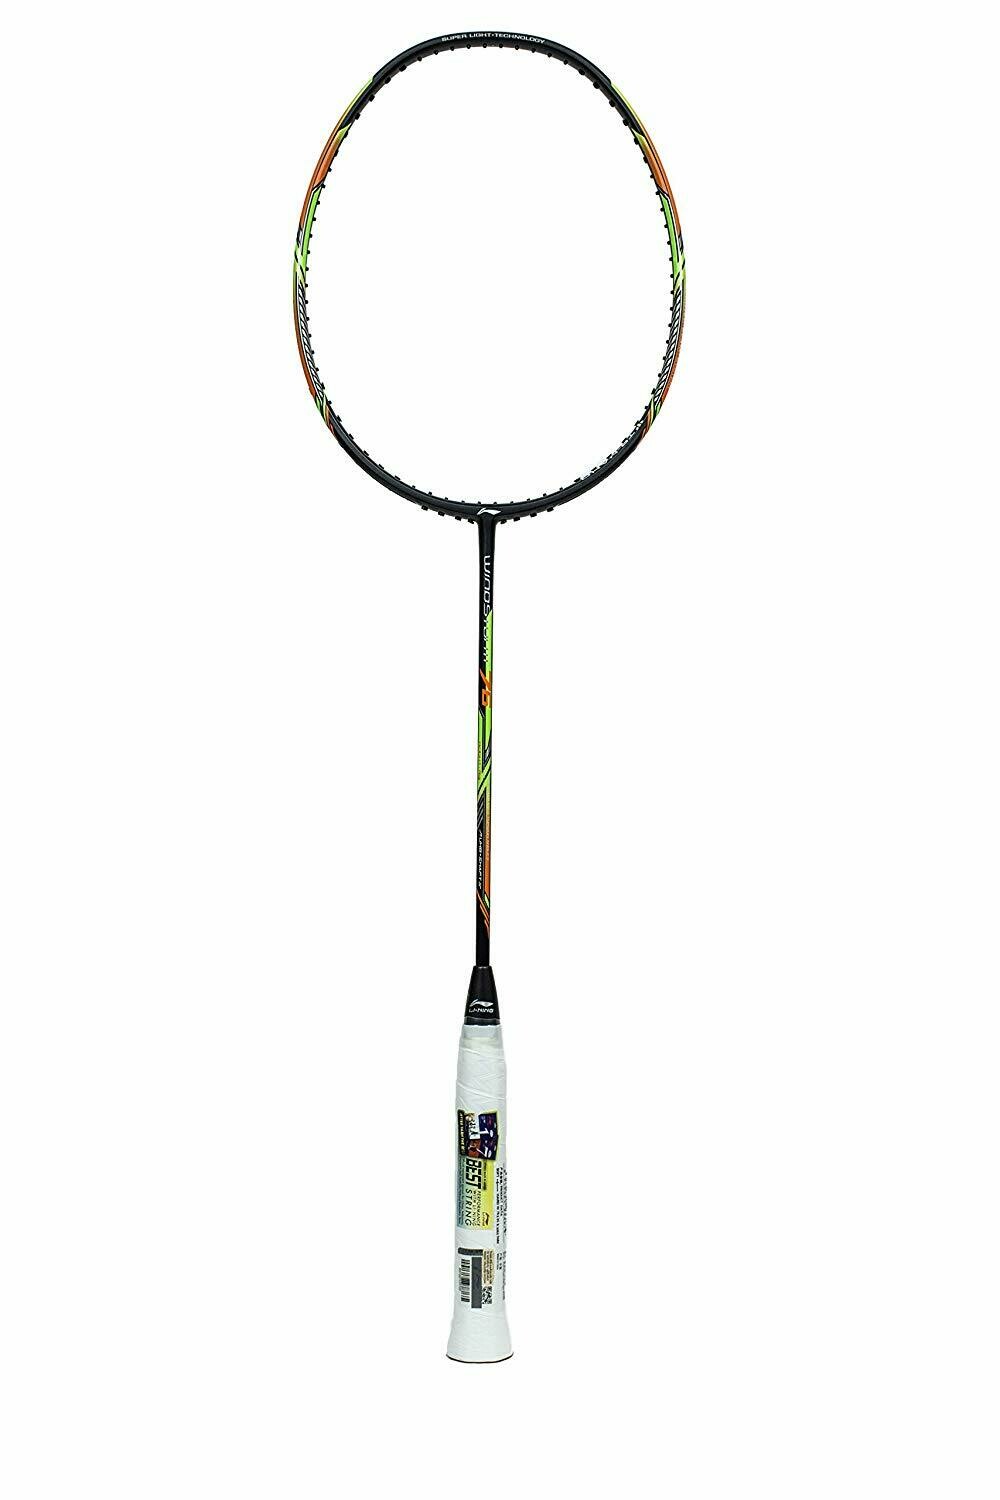 LI-NING Windstorm 76 Black Badminton Racket